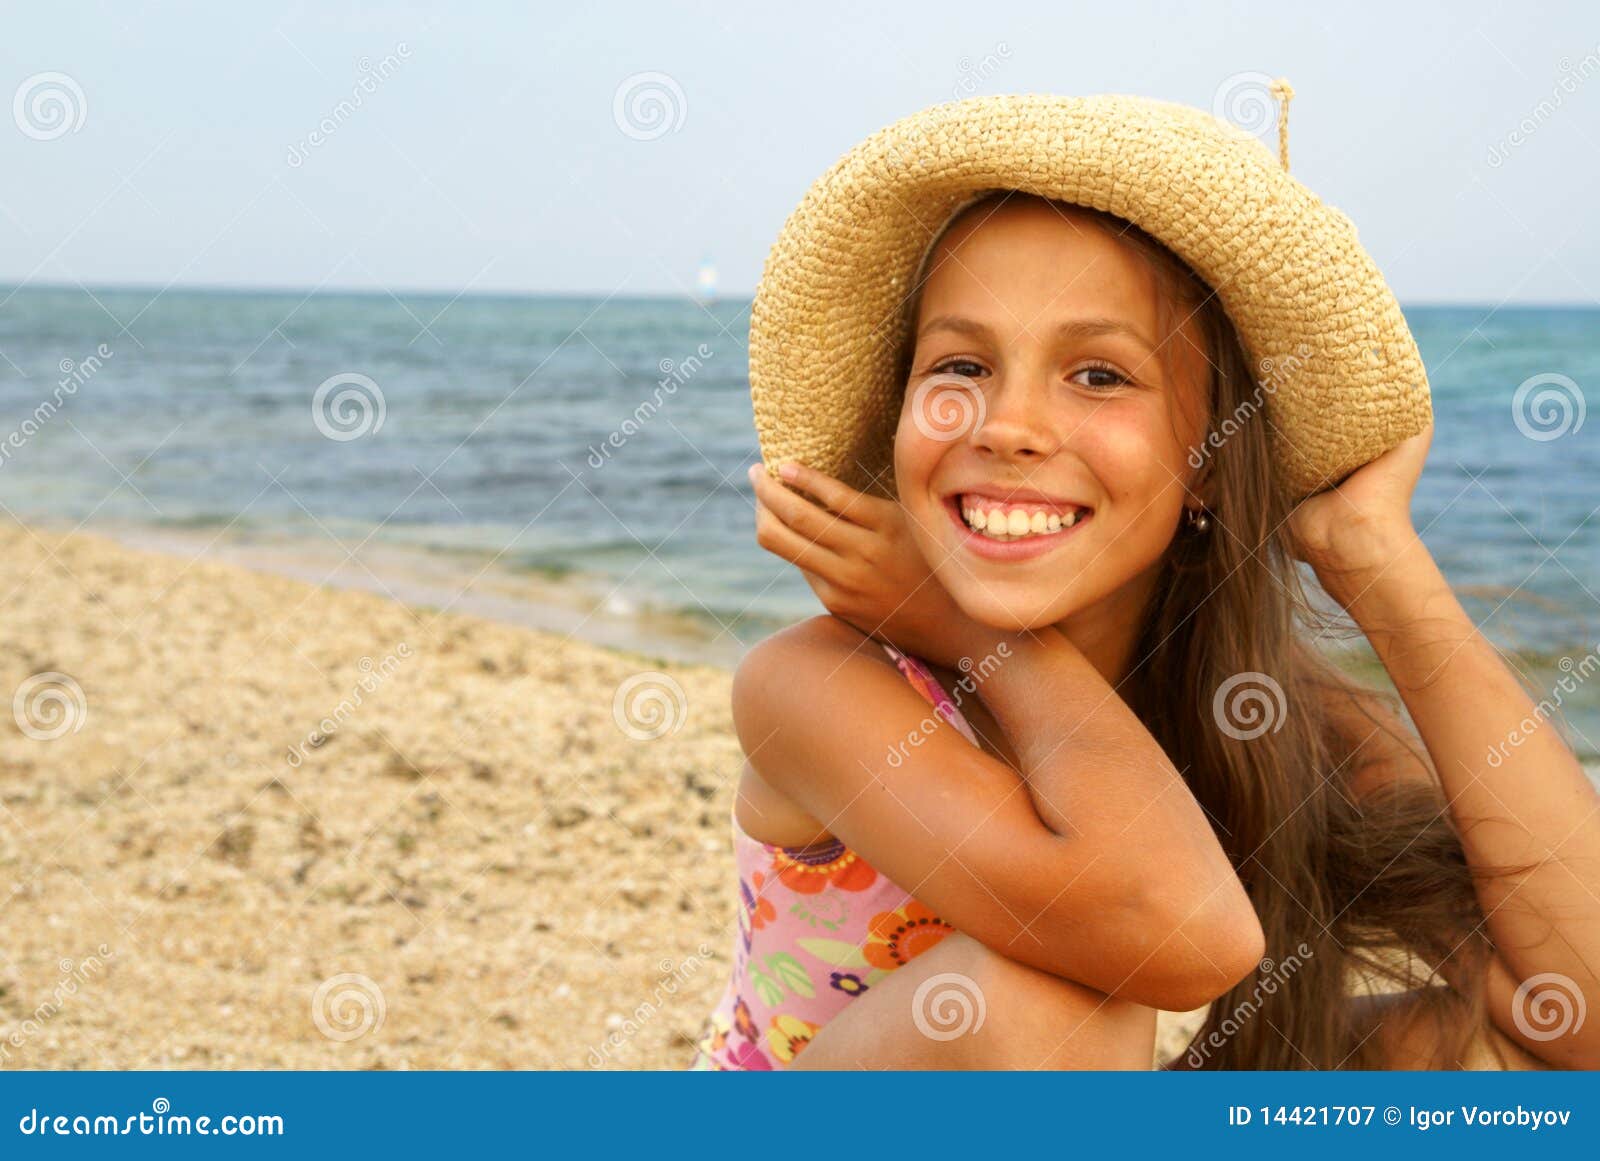 Preteen girl on sea beach stock image. Image of smile - 14421707